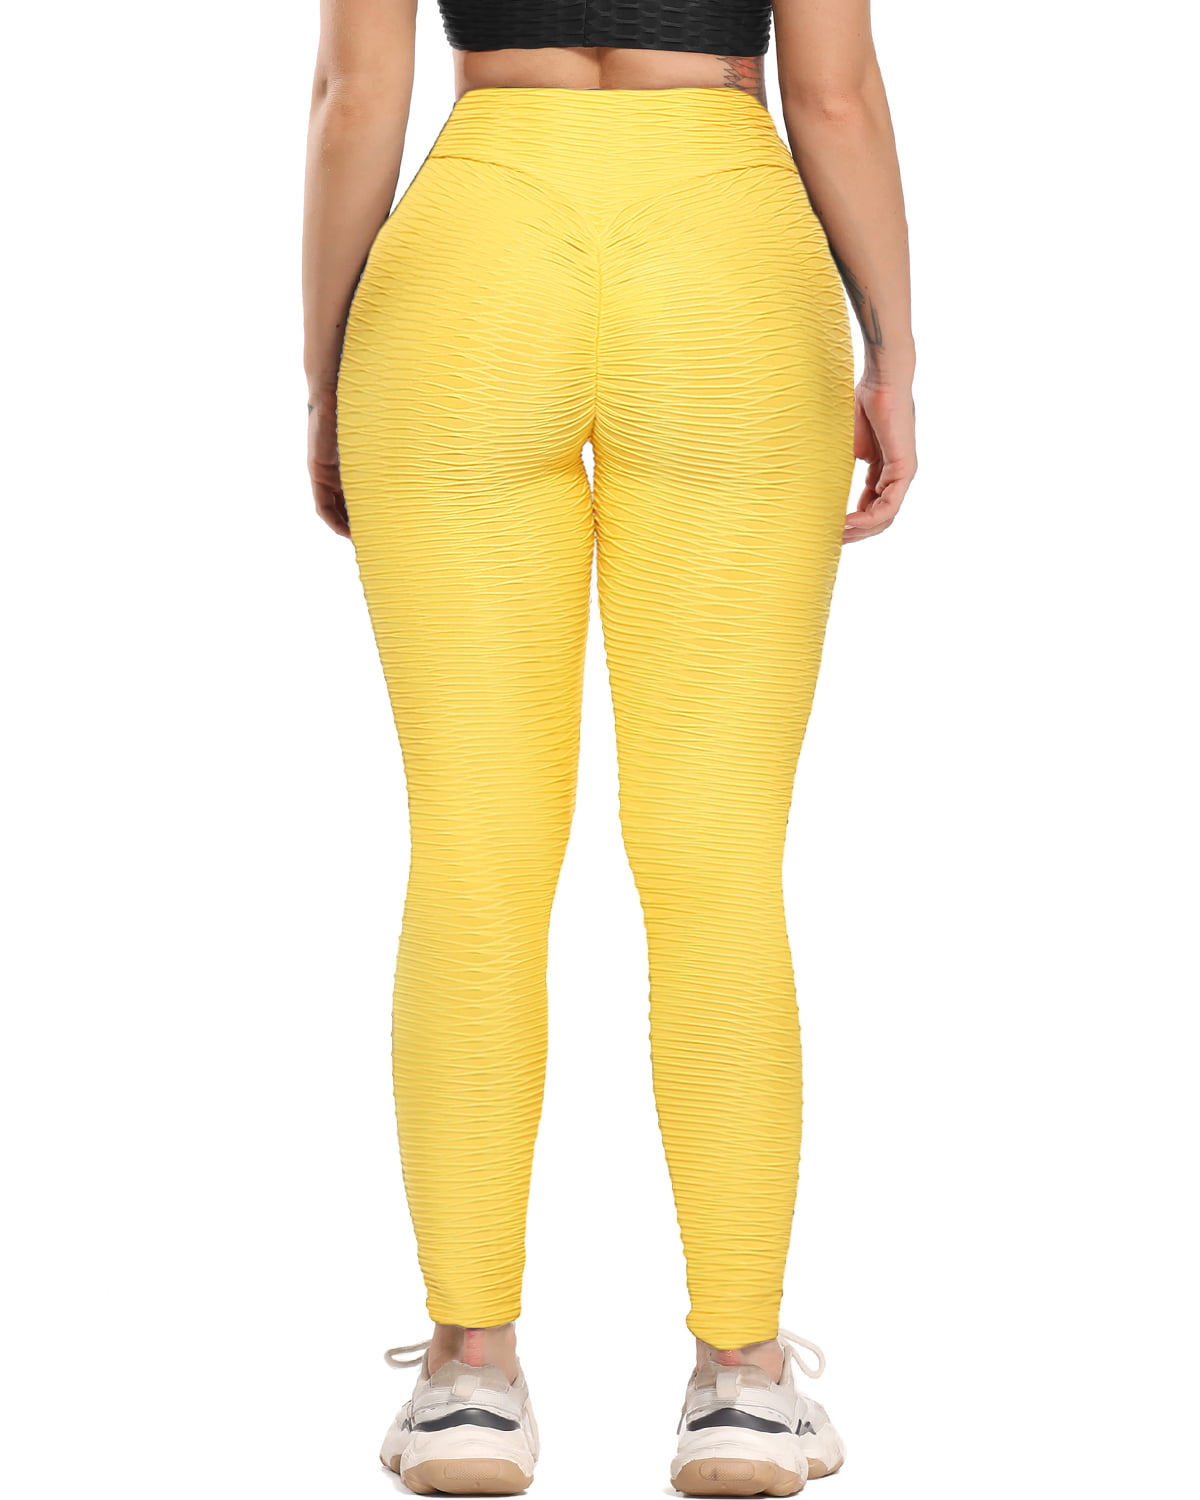 SEASUM Women's High Waist Yoga Butt Leggings Textured Workout Running Pants  Sports Slimming Tights Yellow XL